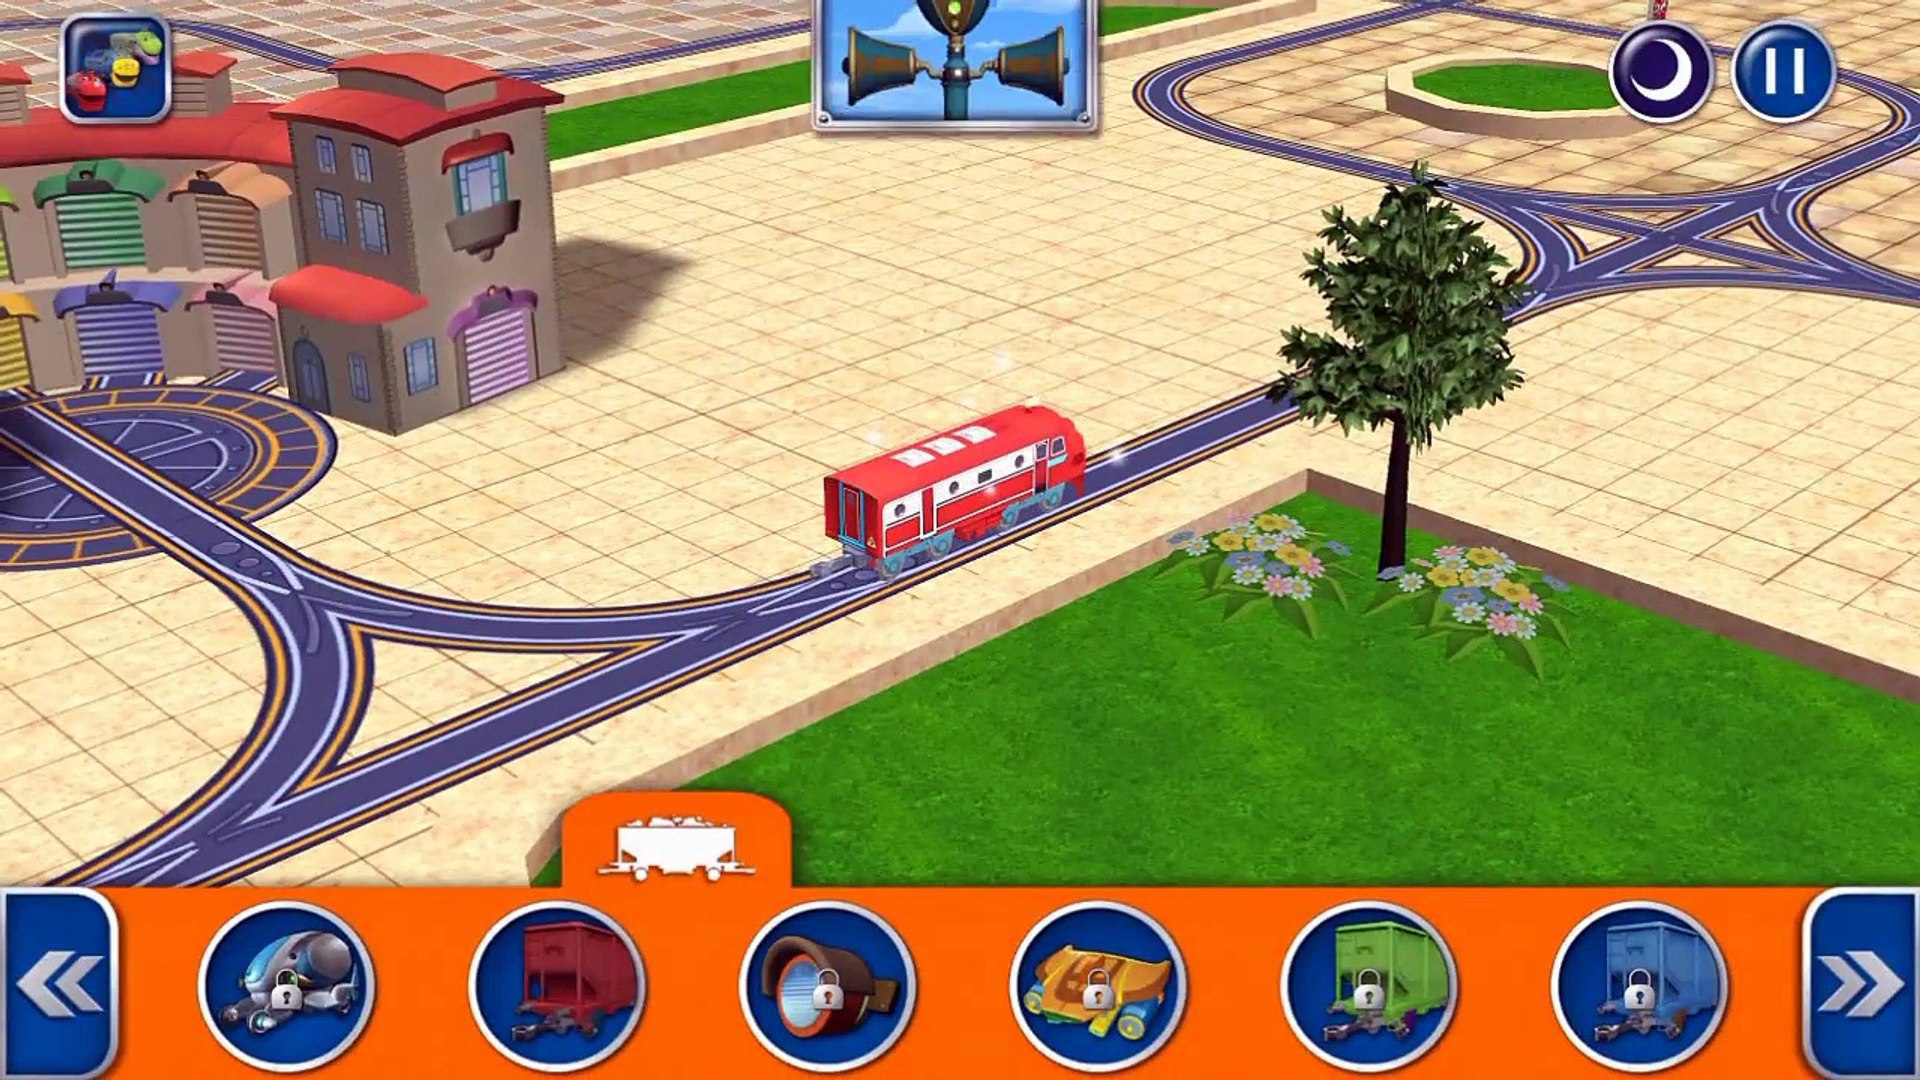 Chuggington Train Game Online, SAVE 44% - www.colegiovidanova.com.br